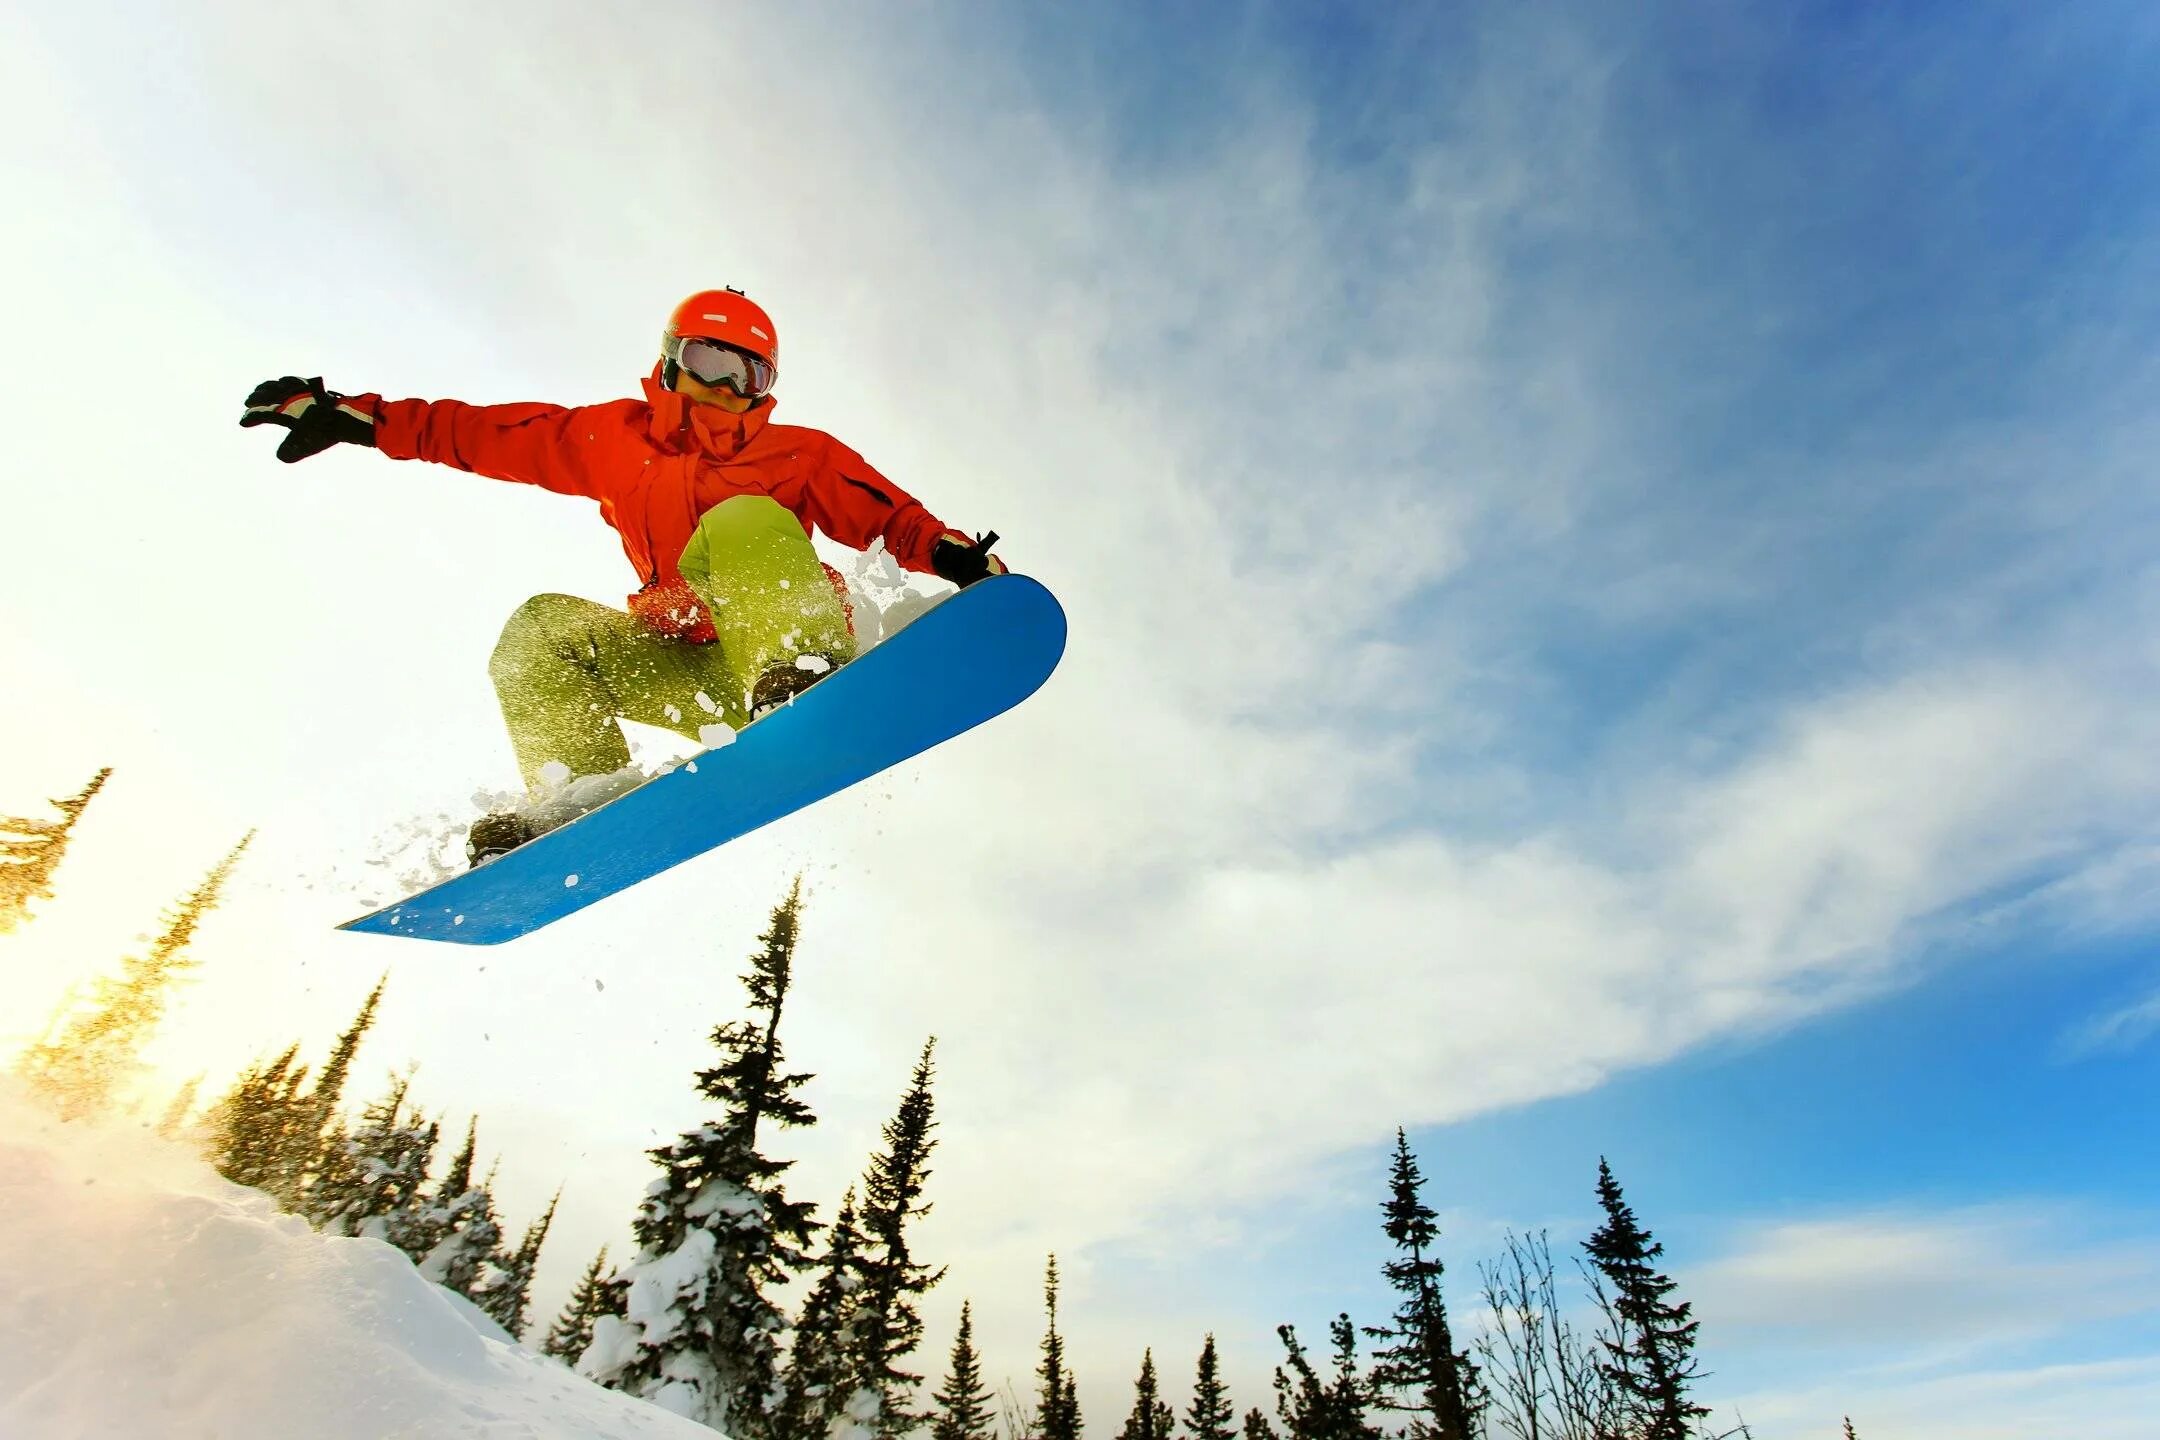 Фристайл сноуборд катания. Трэвис Райс сноубордист. Зимний спорт. Трюки на сноуборде. Go snowboarding